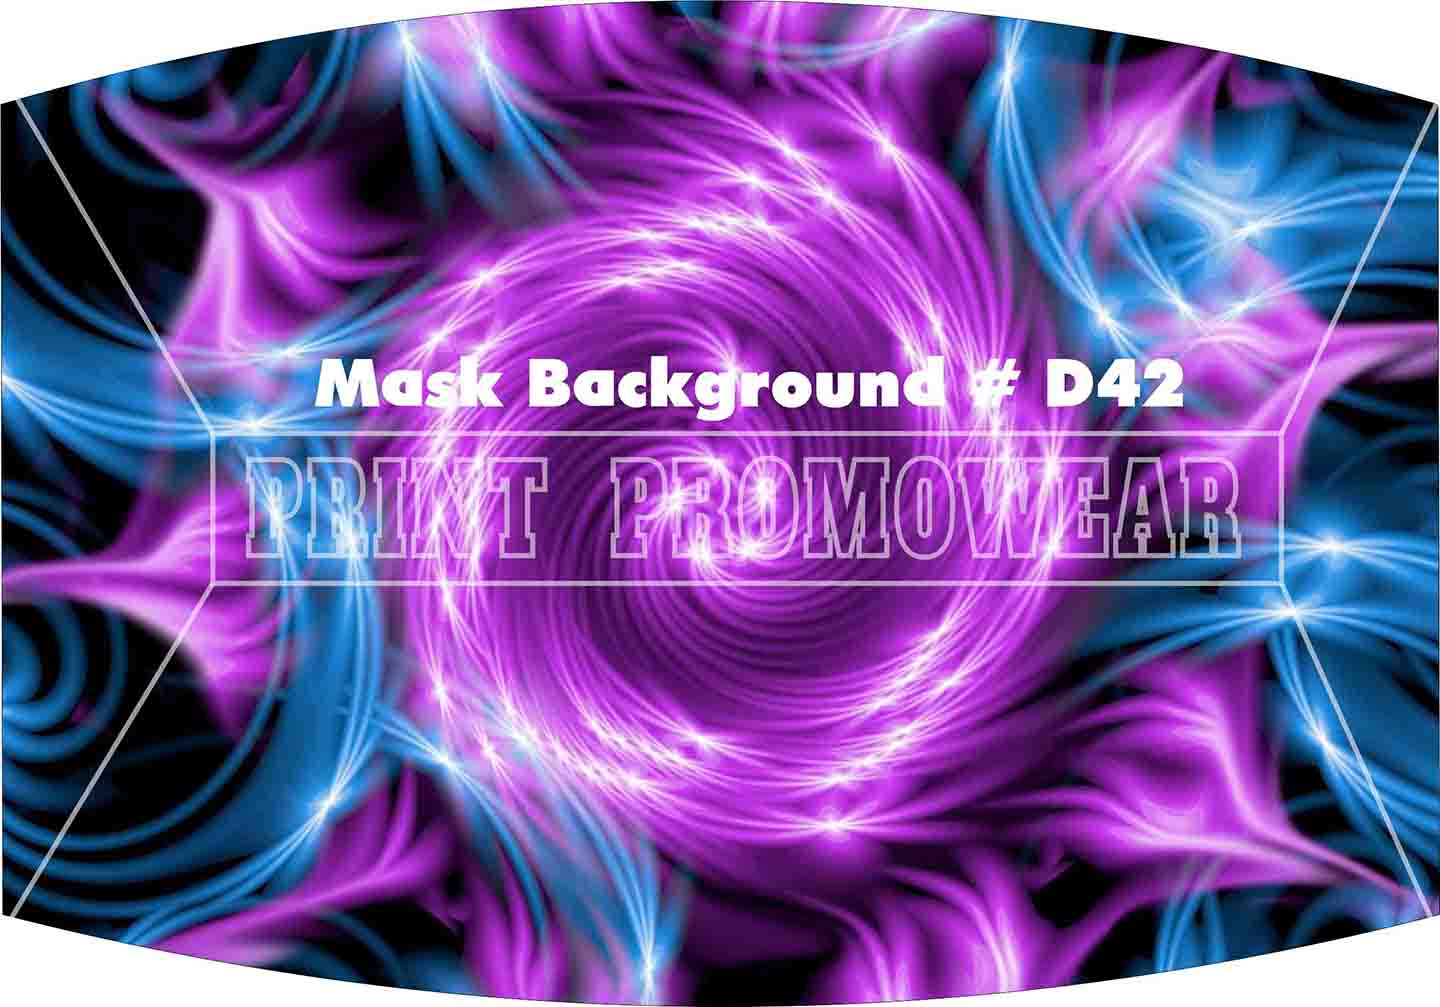 Image/MaskBackground/d42.jpg